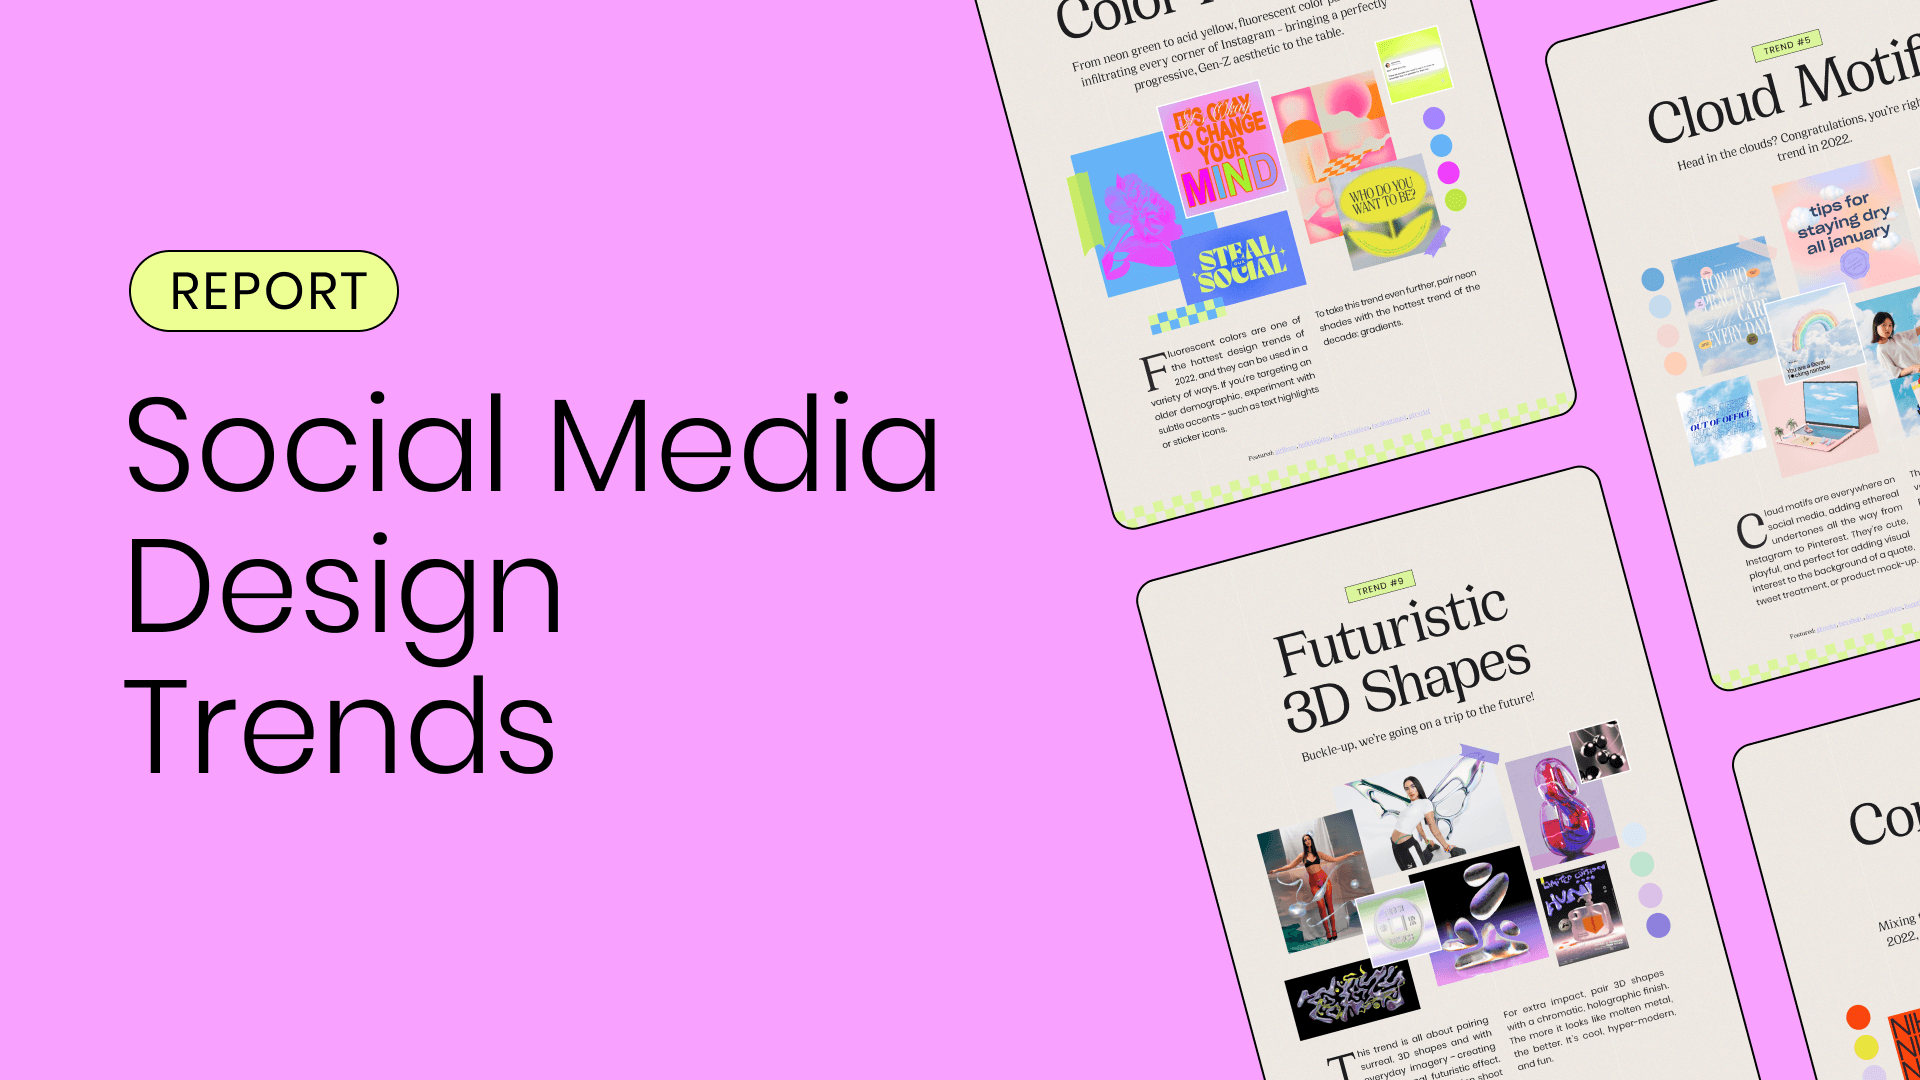 Social media design trend examples like futuristic 3d shapes and cloud motifs